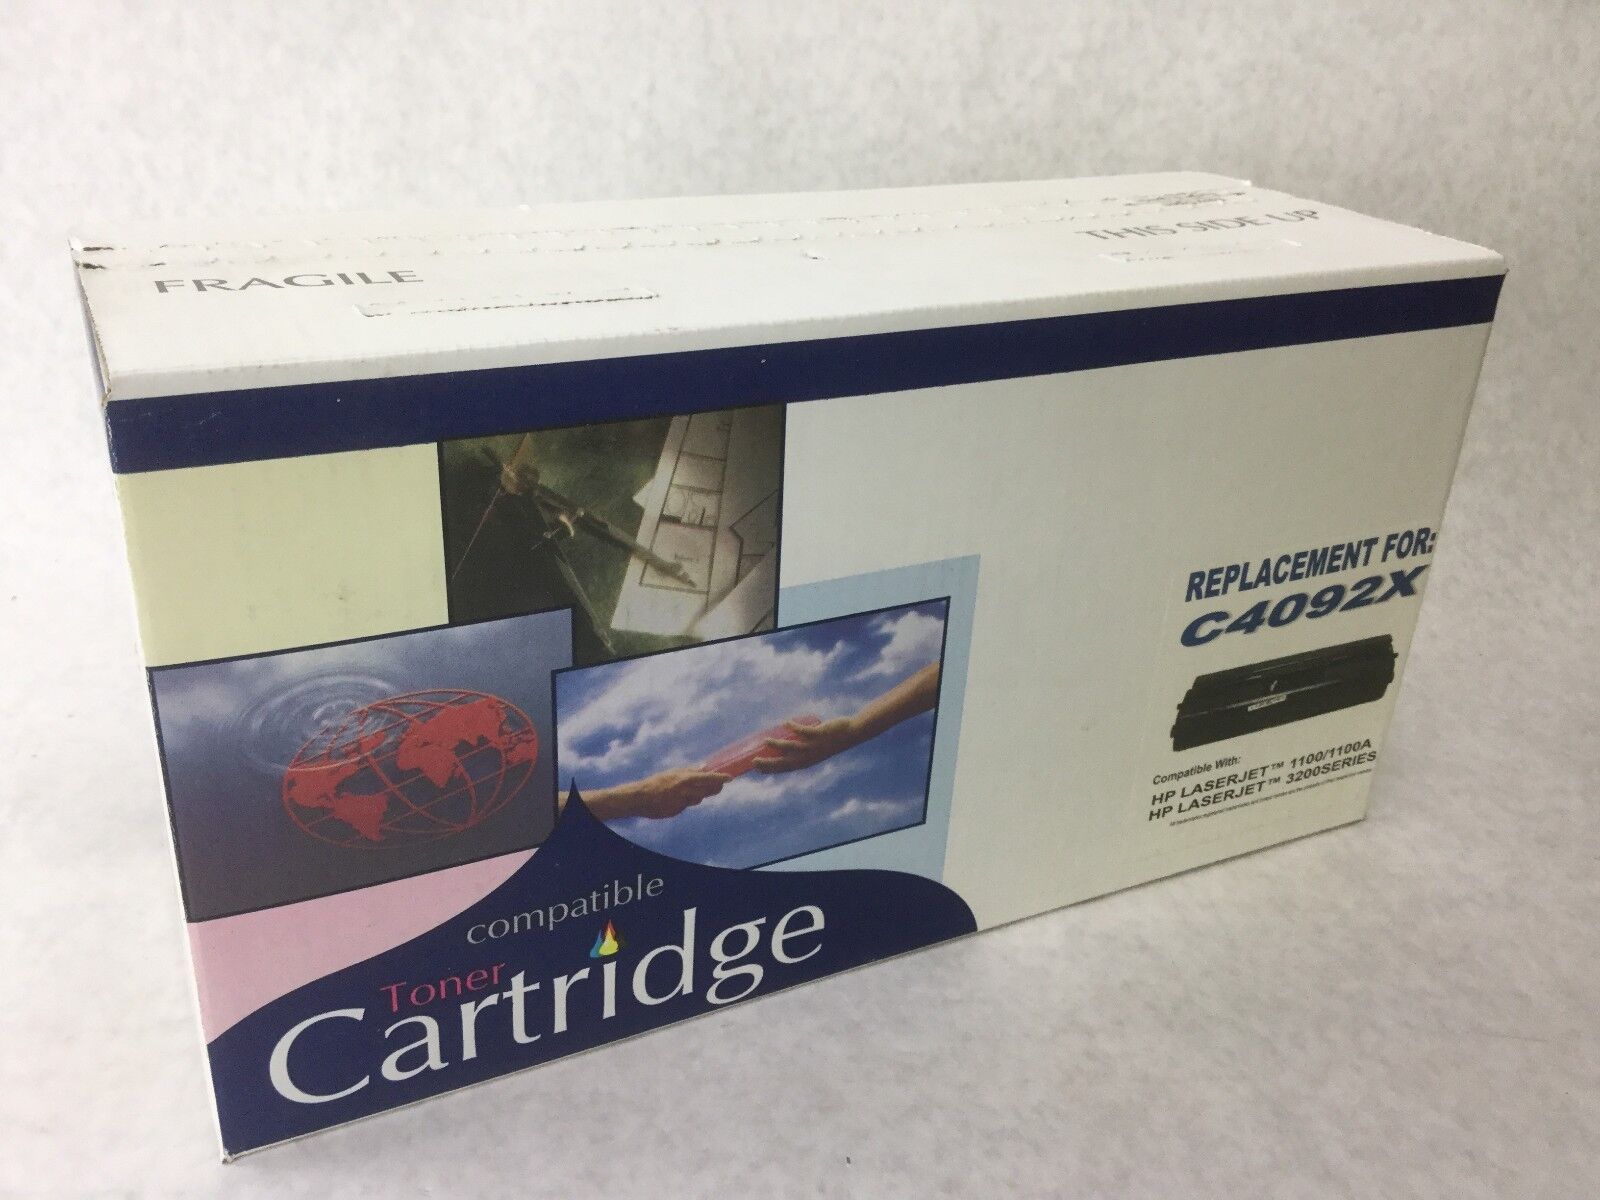 Toner Cartridge Black Compatible w/ C4092X (HP LaserJet 1100/1100A/3200 Series)